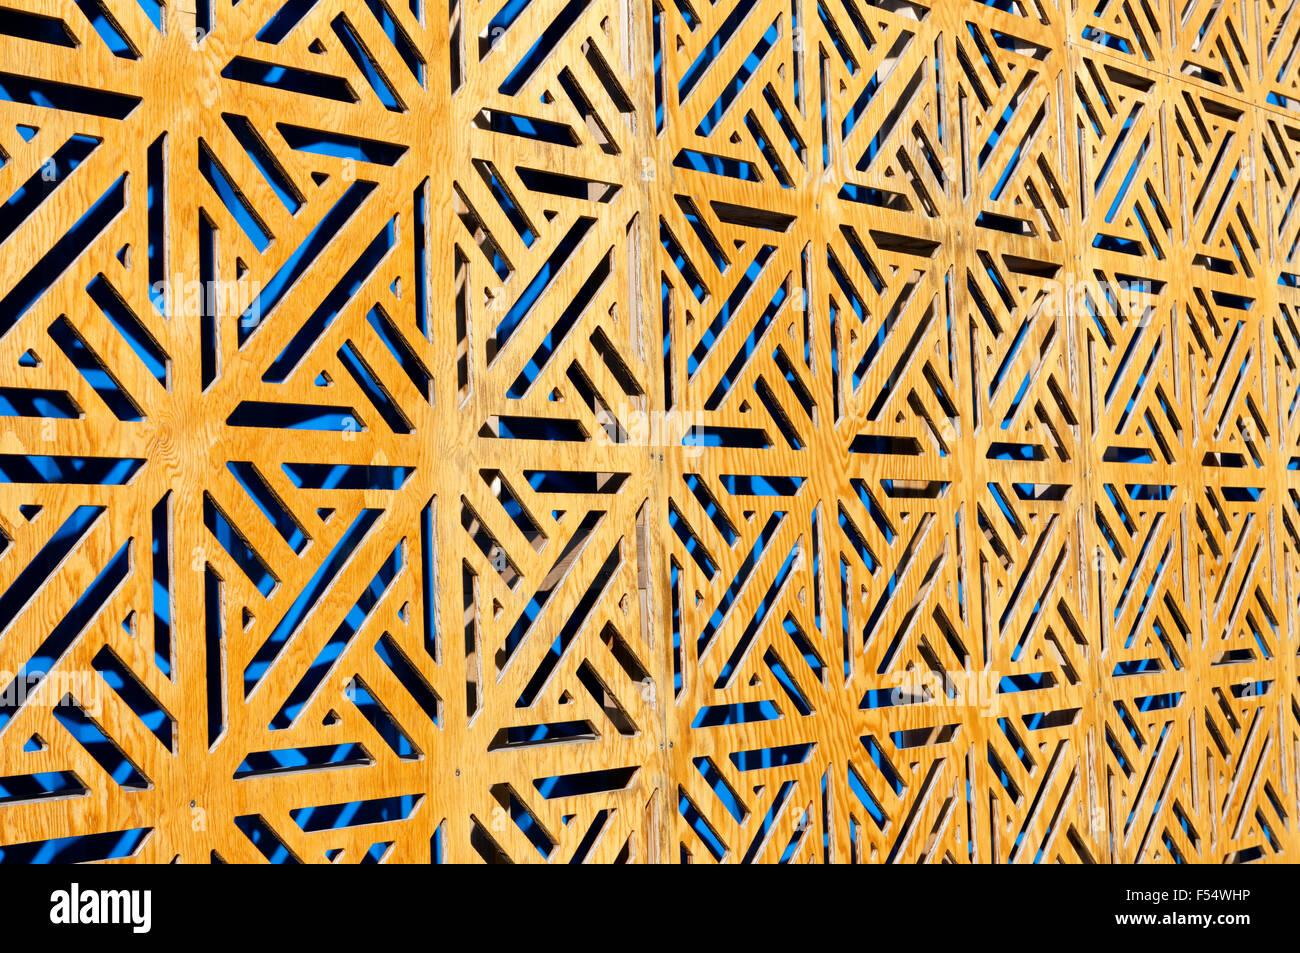 Intricate wooden lattice background Stock Photo